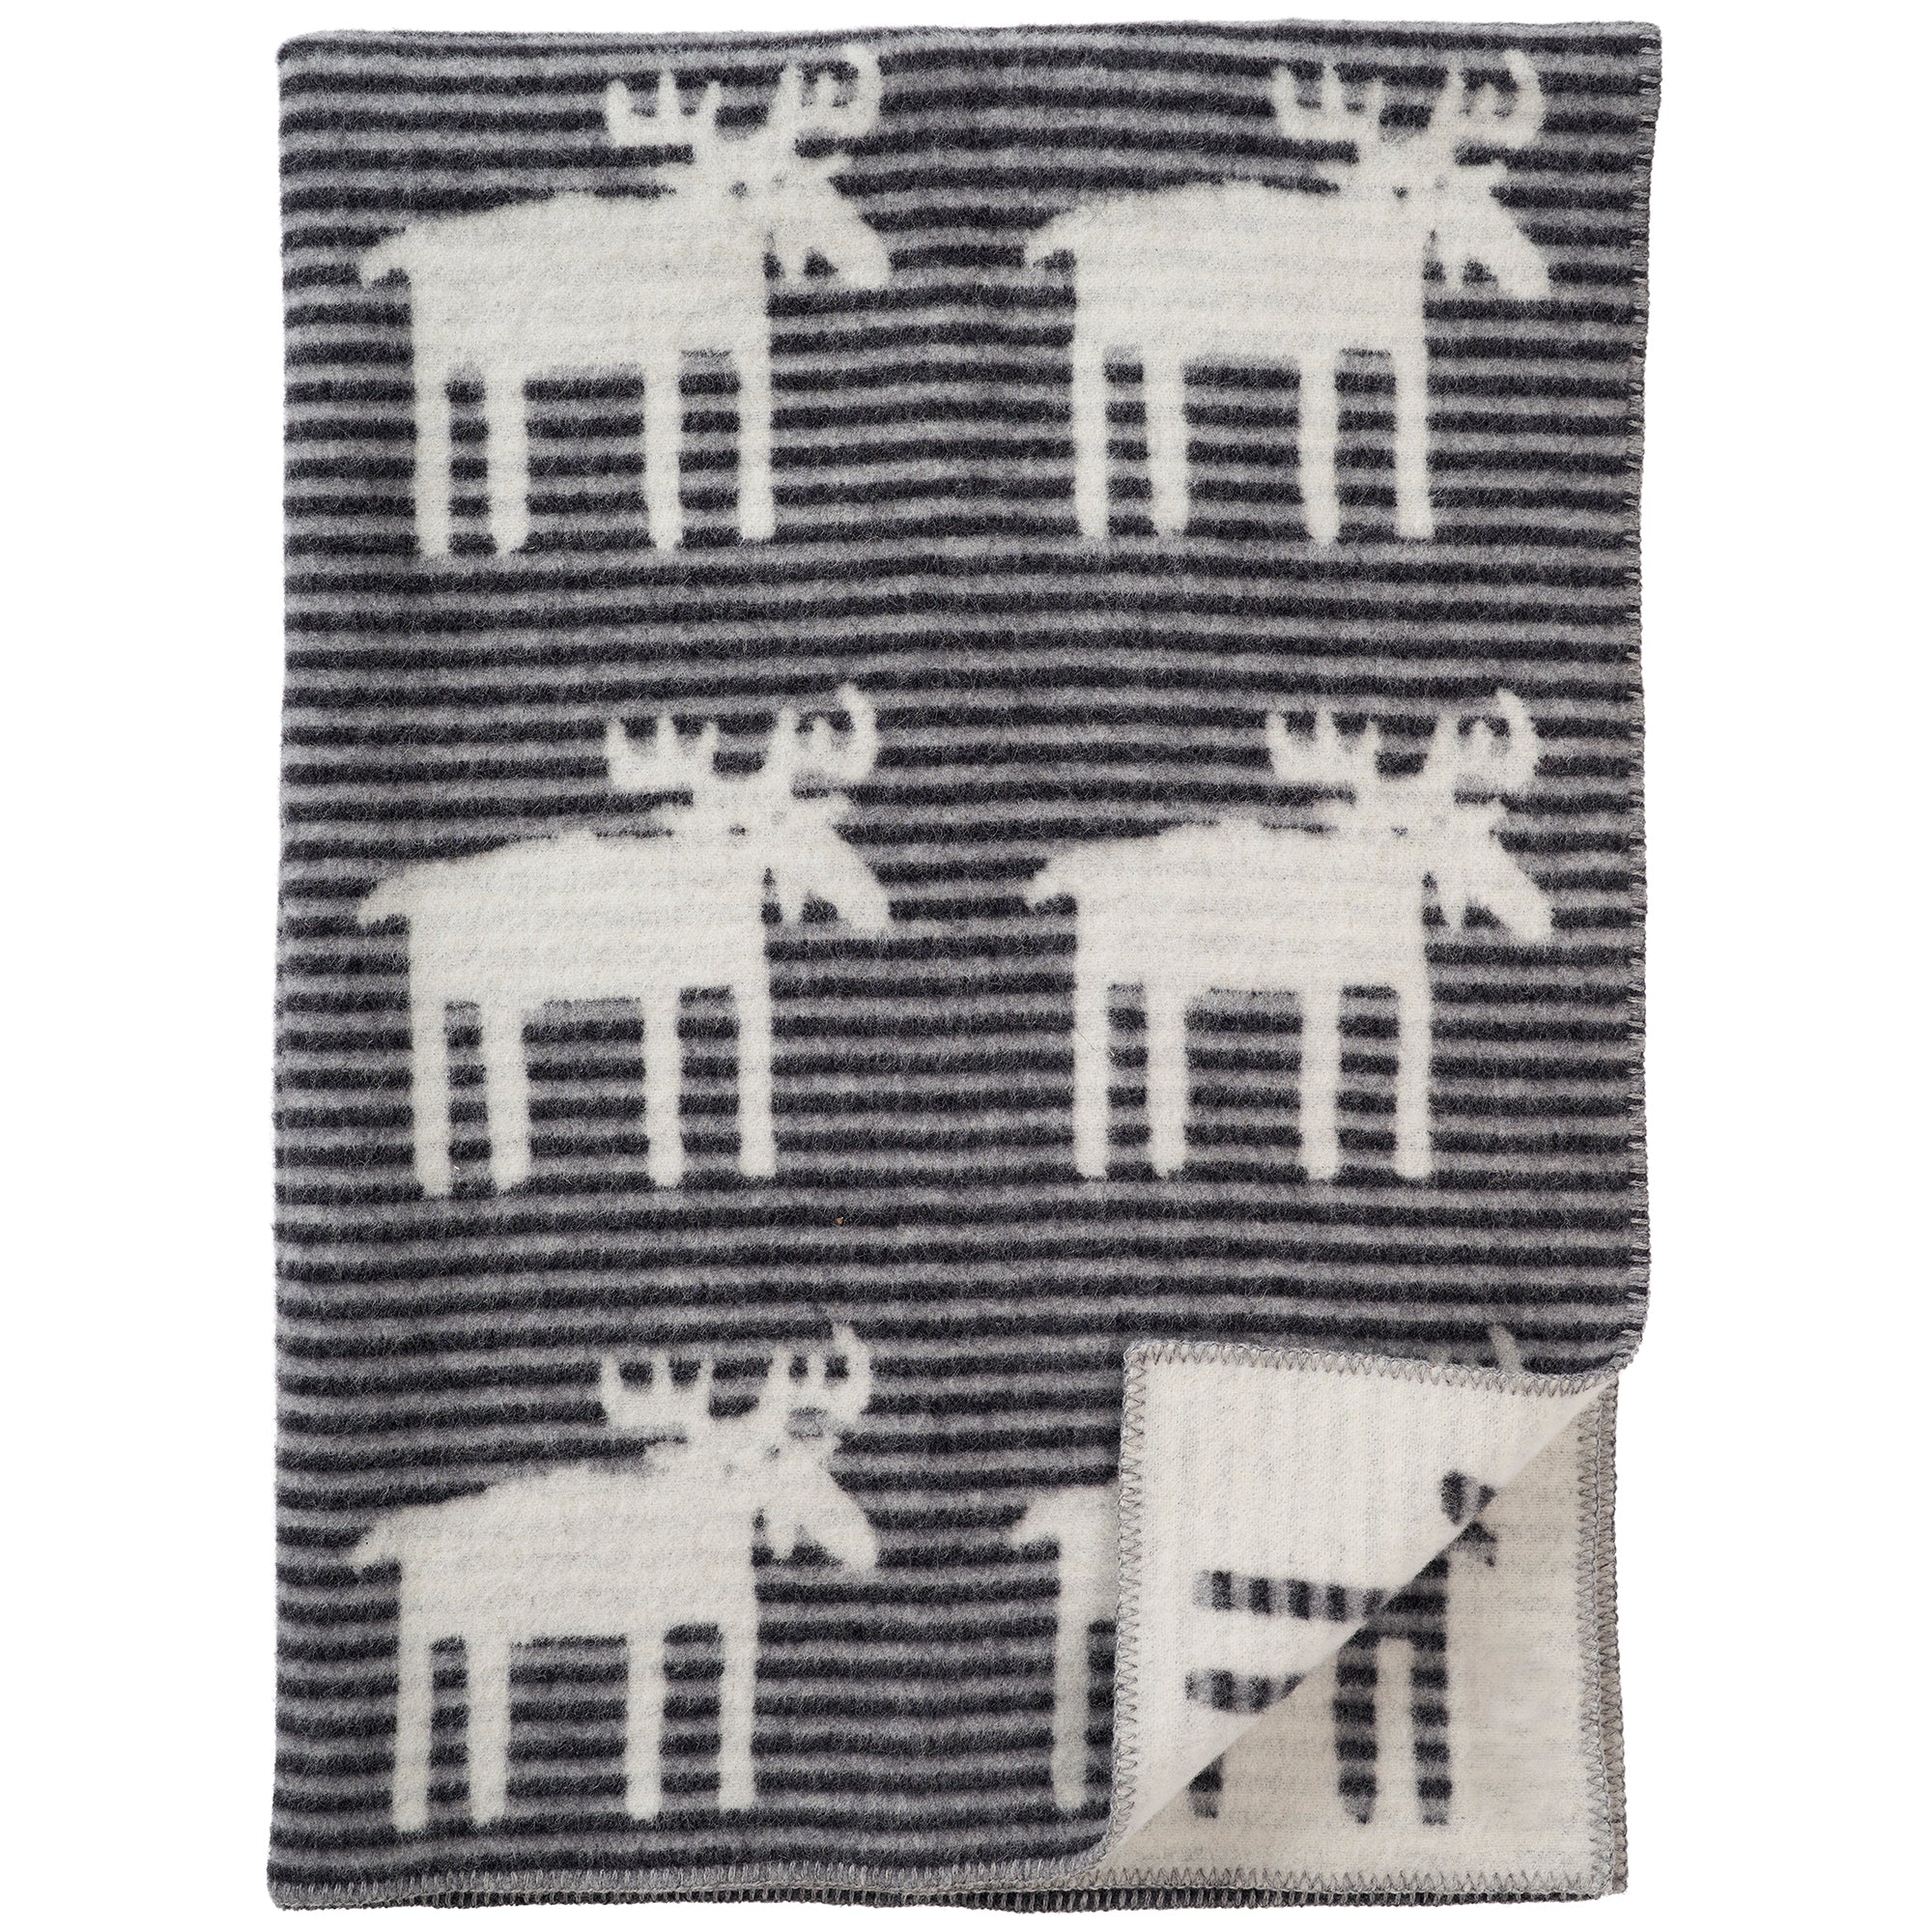 Moose Stripe Grey 130x180cm Eco Lambswool Blanket